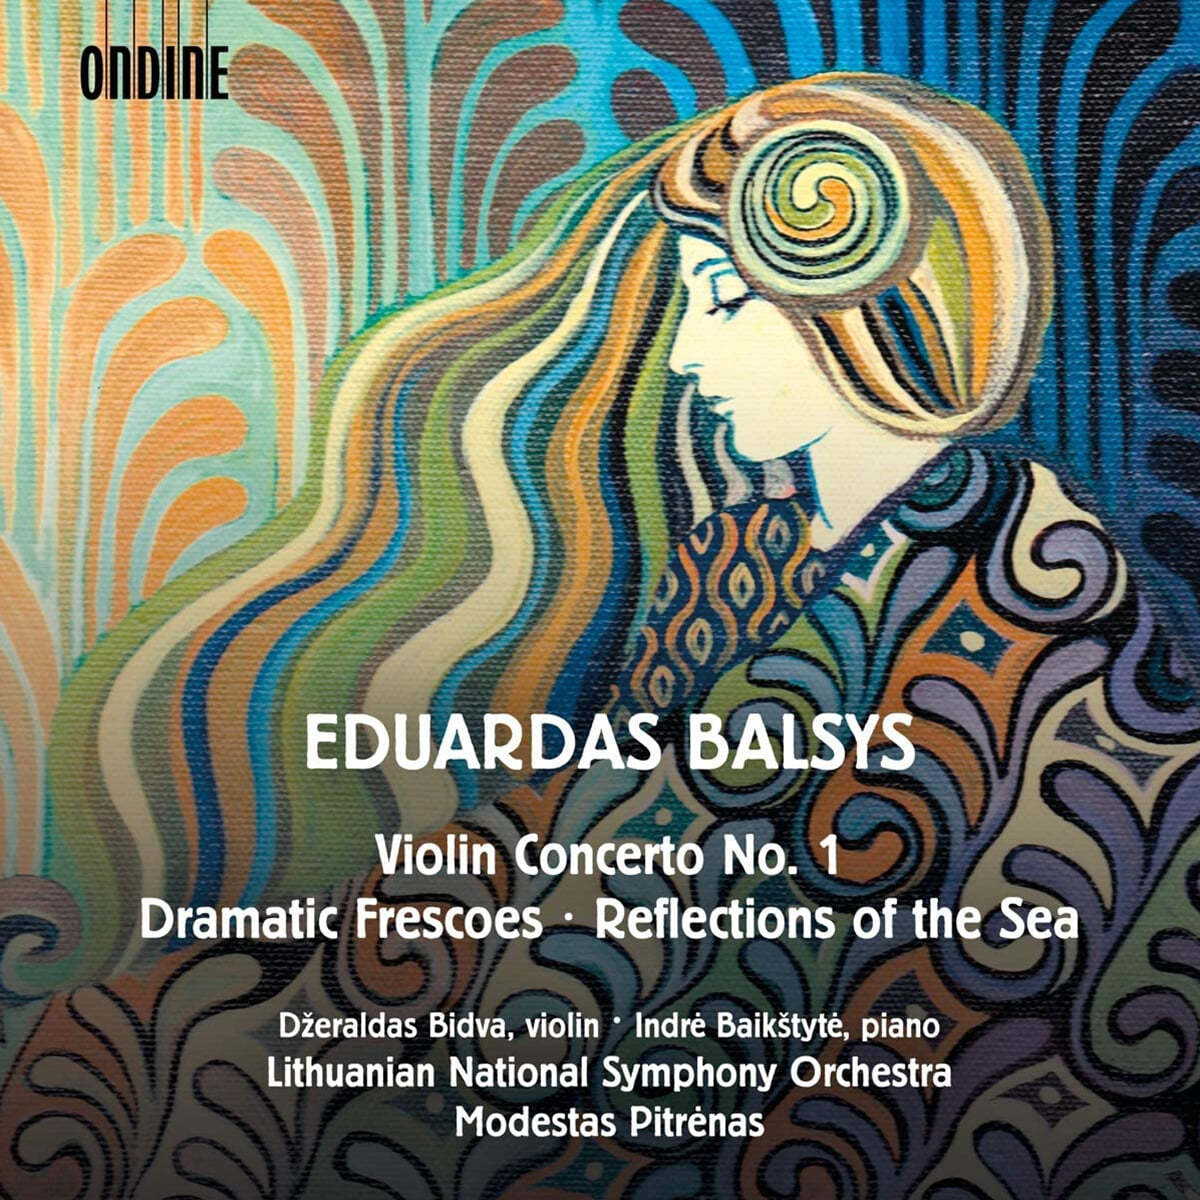 Dzeraldas Bidva 에두아르다스 발시스: 바이올린 협주곡 1번, 바다의 반영, 극적인 프레스코화 (Eduardas Balsys: Violin Concerto No.1, Reflections of the Sea, Dramatic Frescoes) 